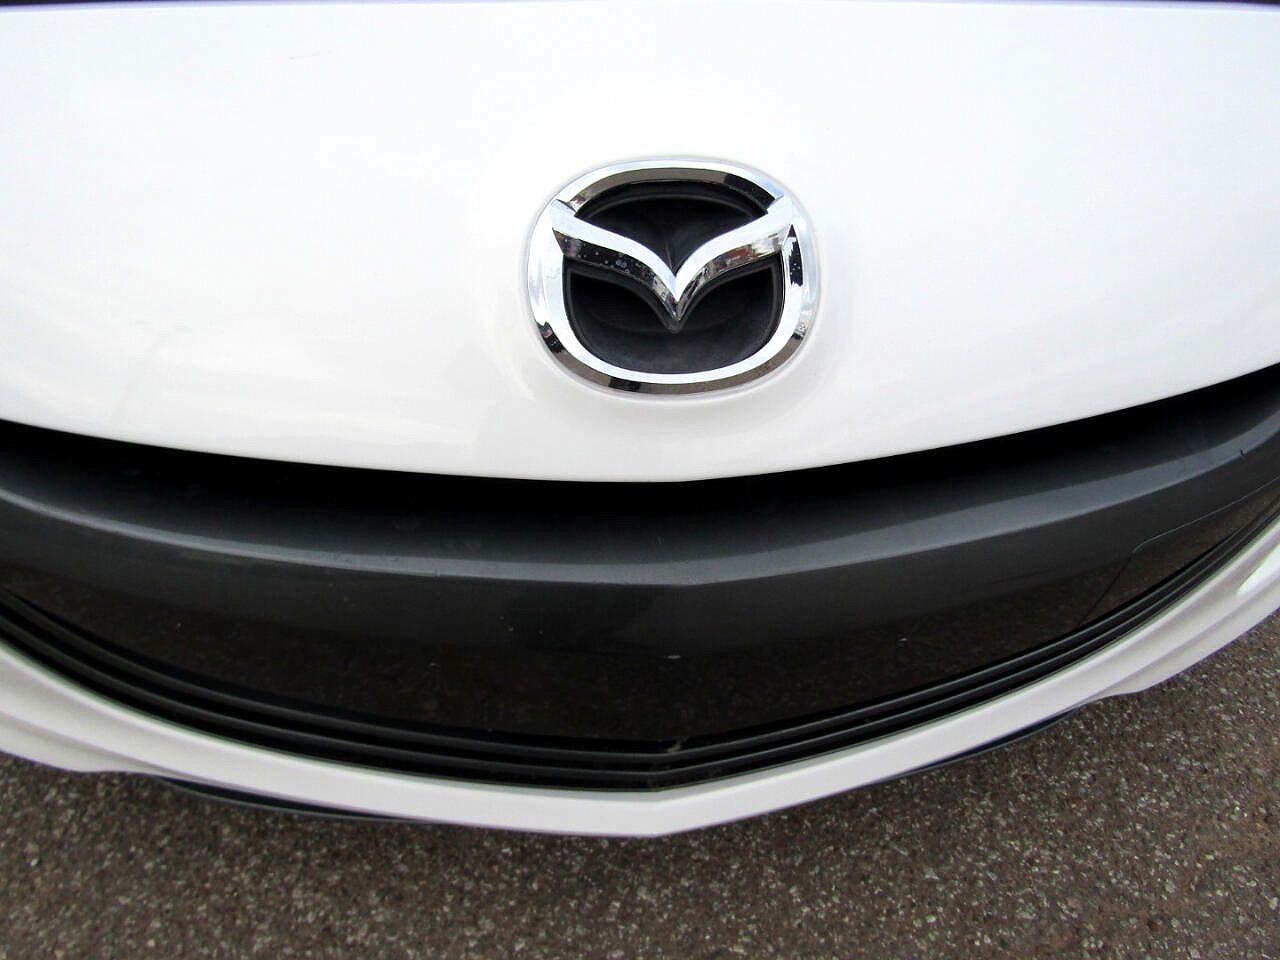 2013 Mazda MAZDASPEED3 Touring image 44